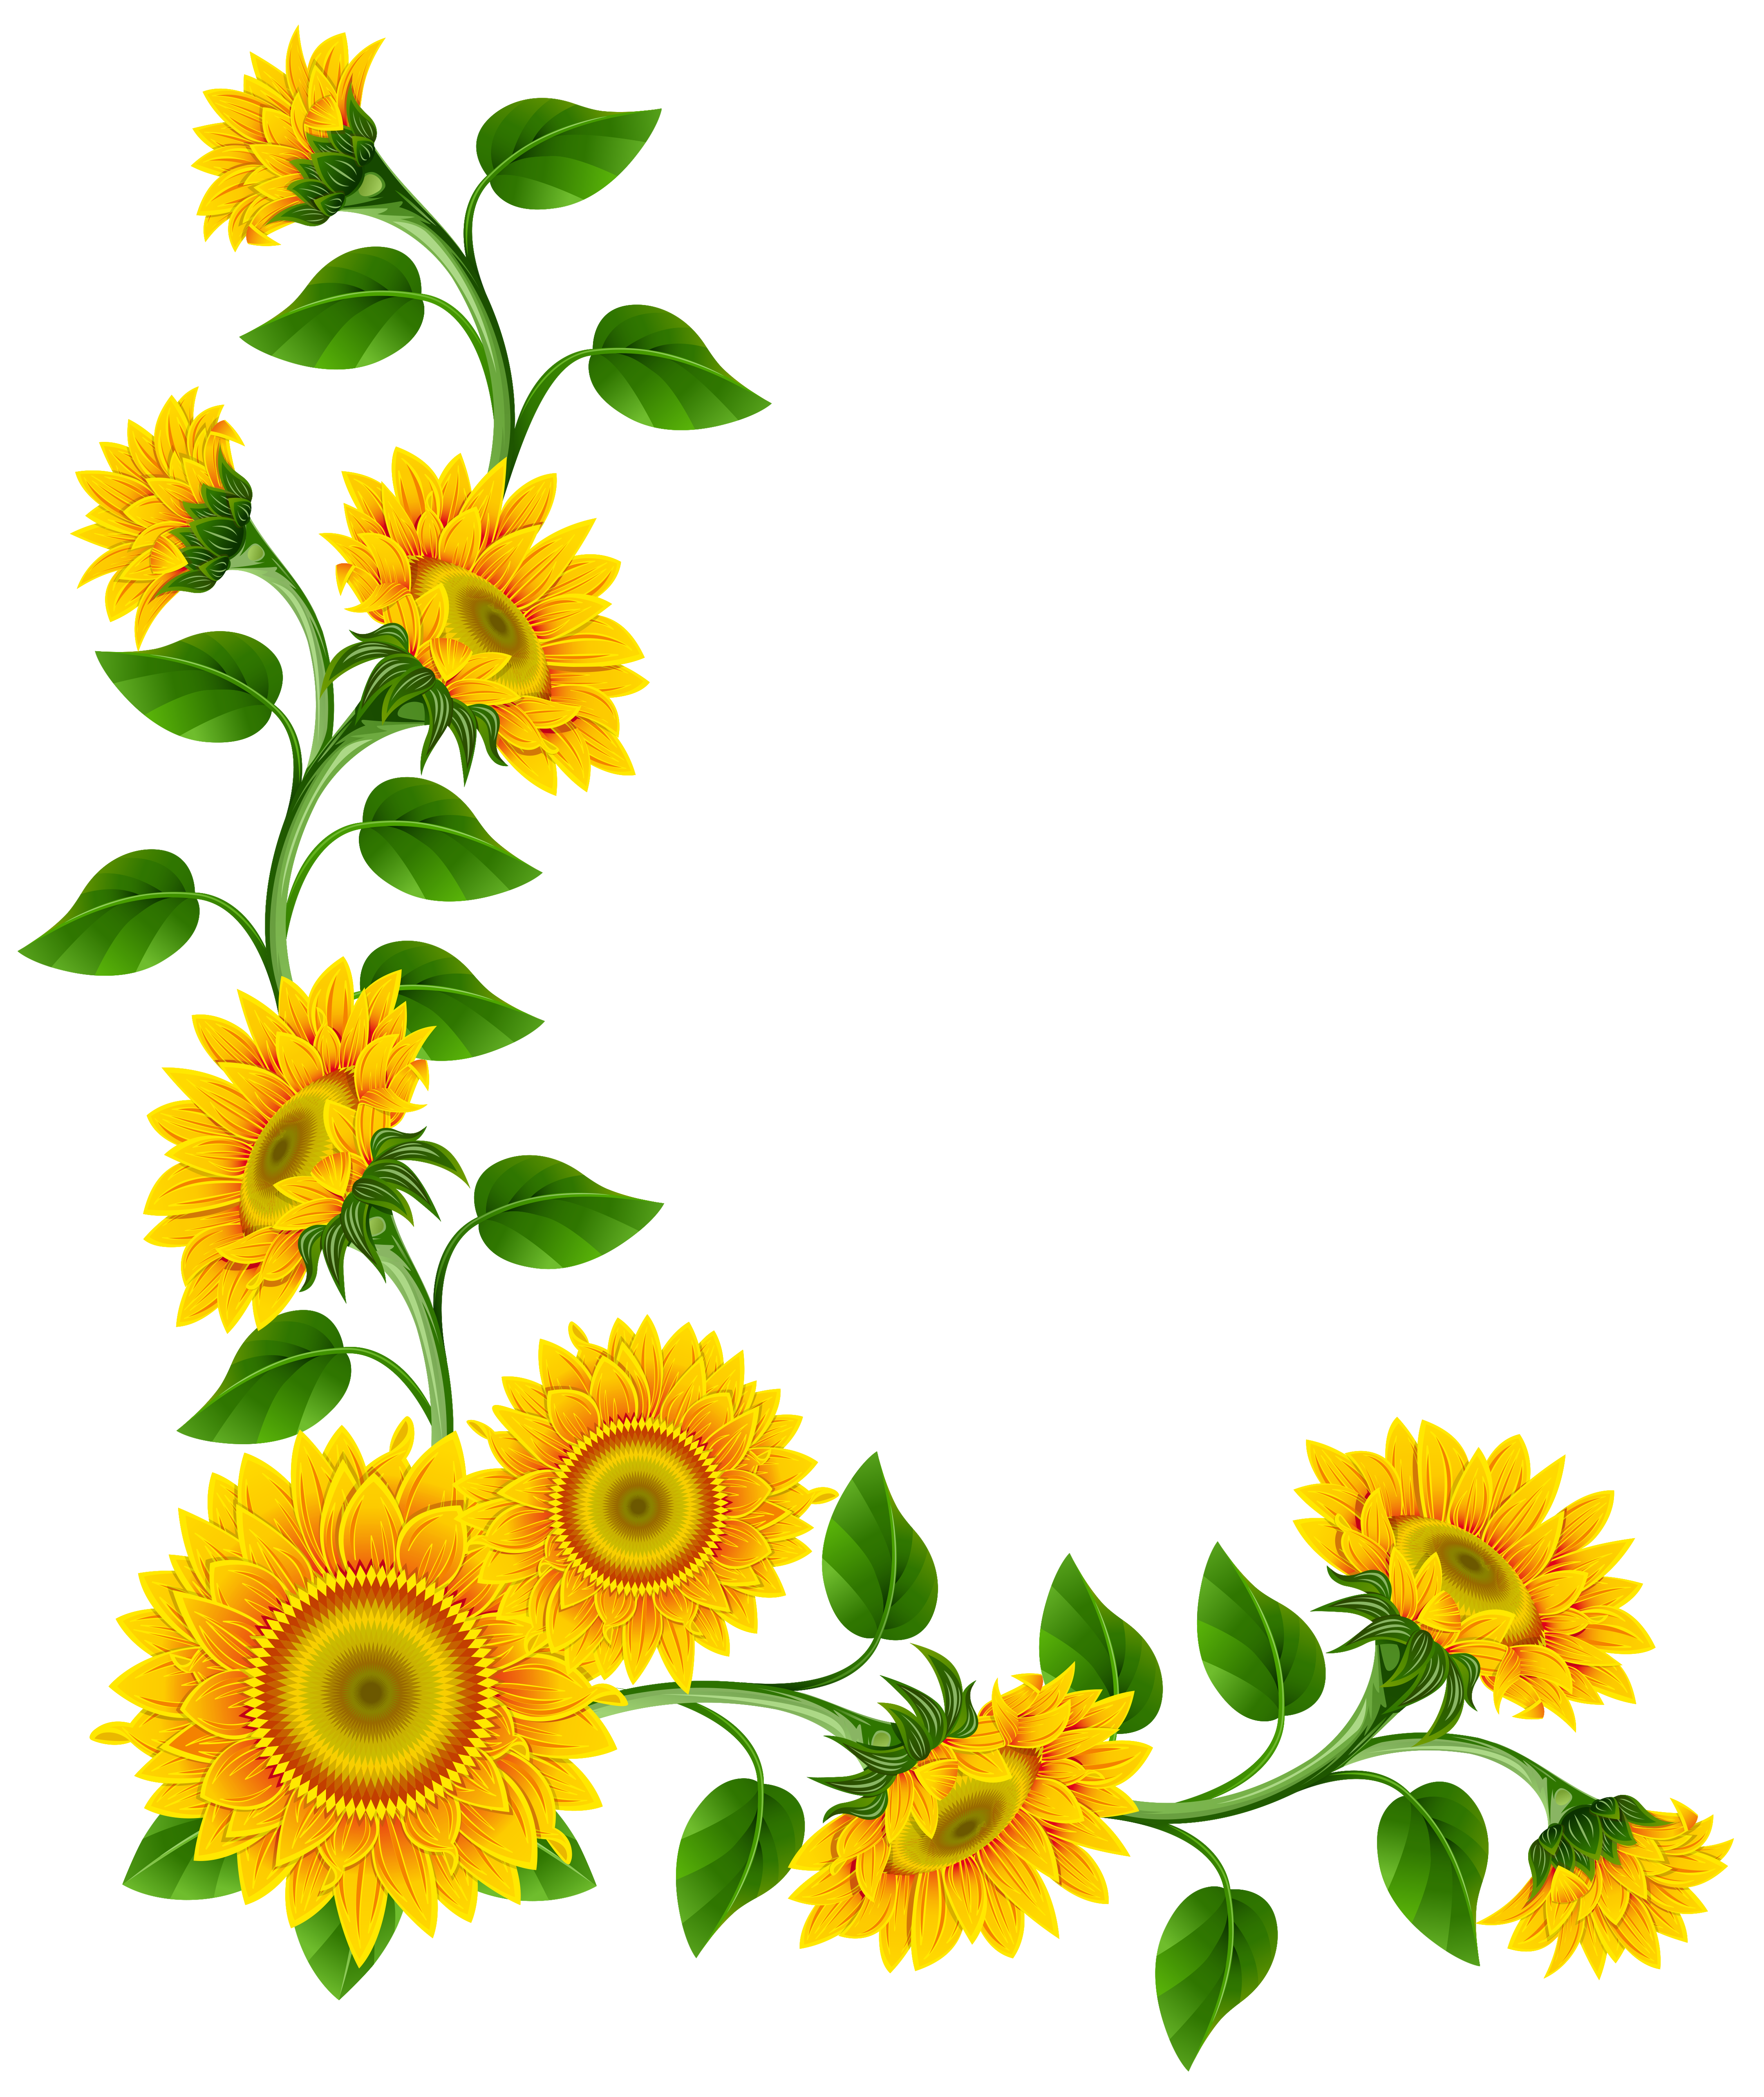 Flower Boarders, Sunflower Art, Clipart Images, Design Elements, Sunflowers,  Coins, Frames, Kitchen Decals, Daisy